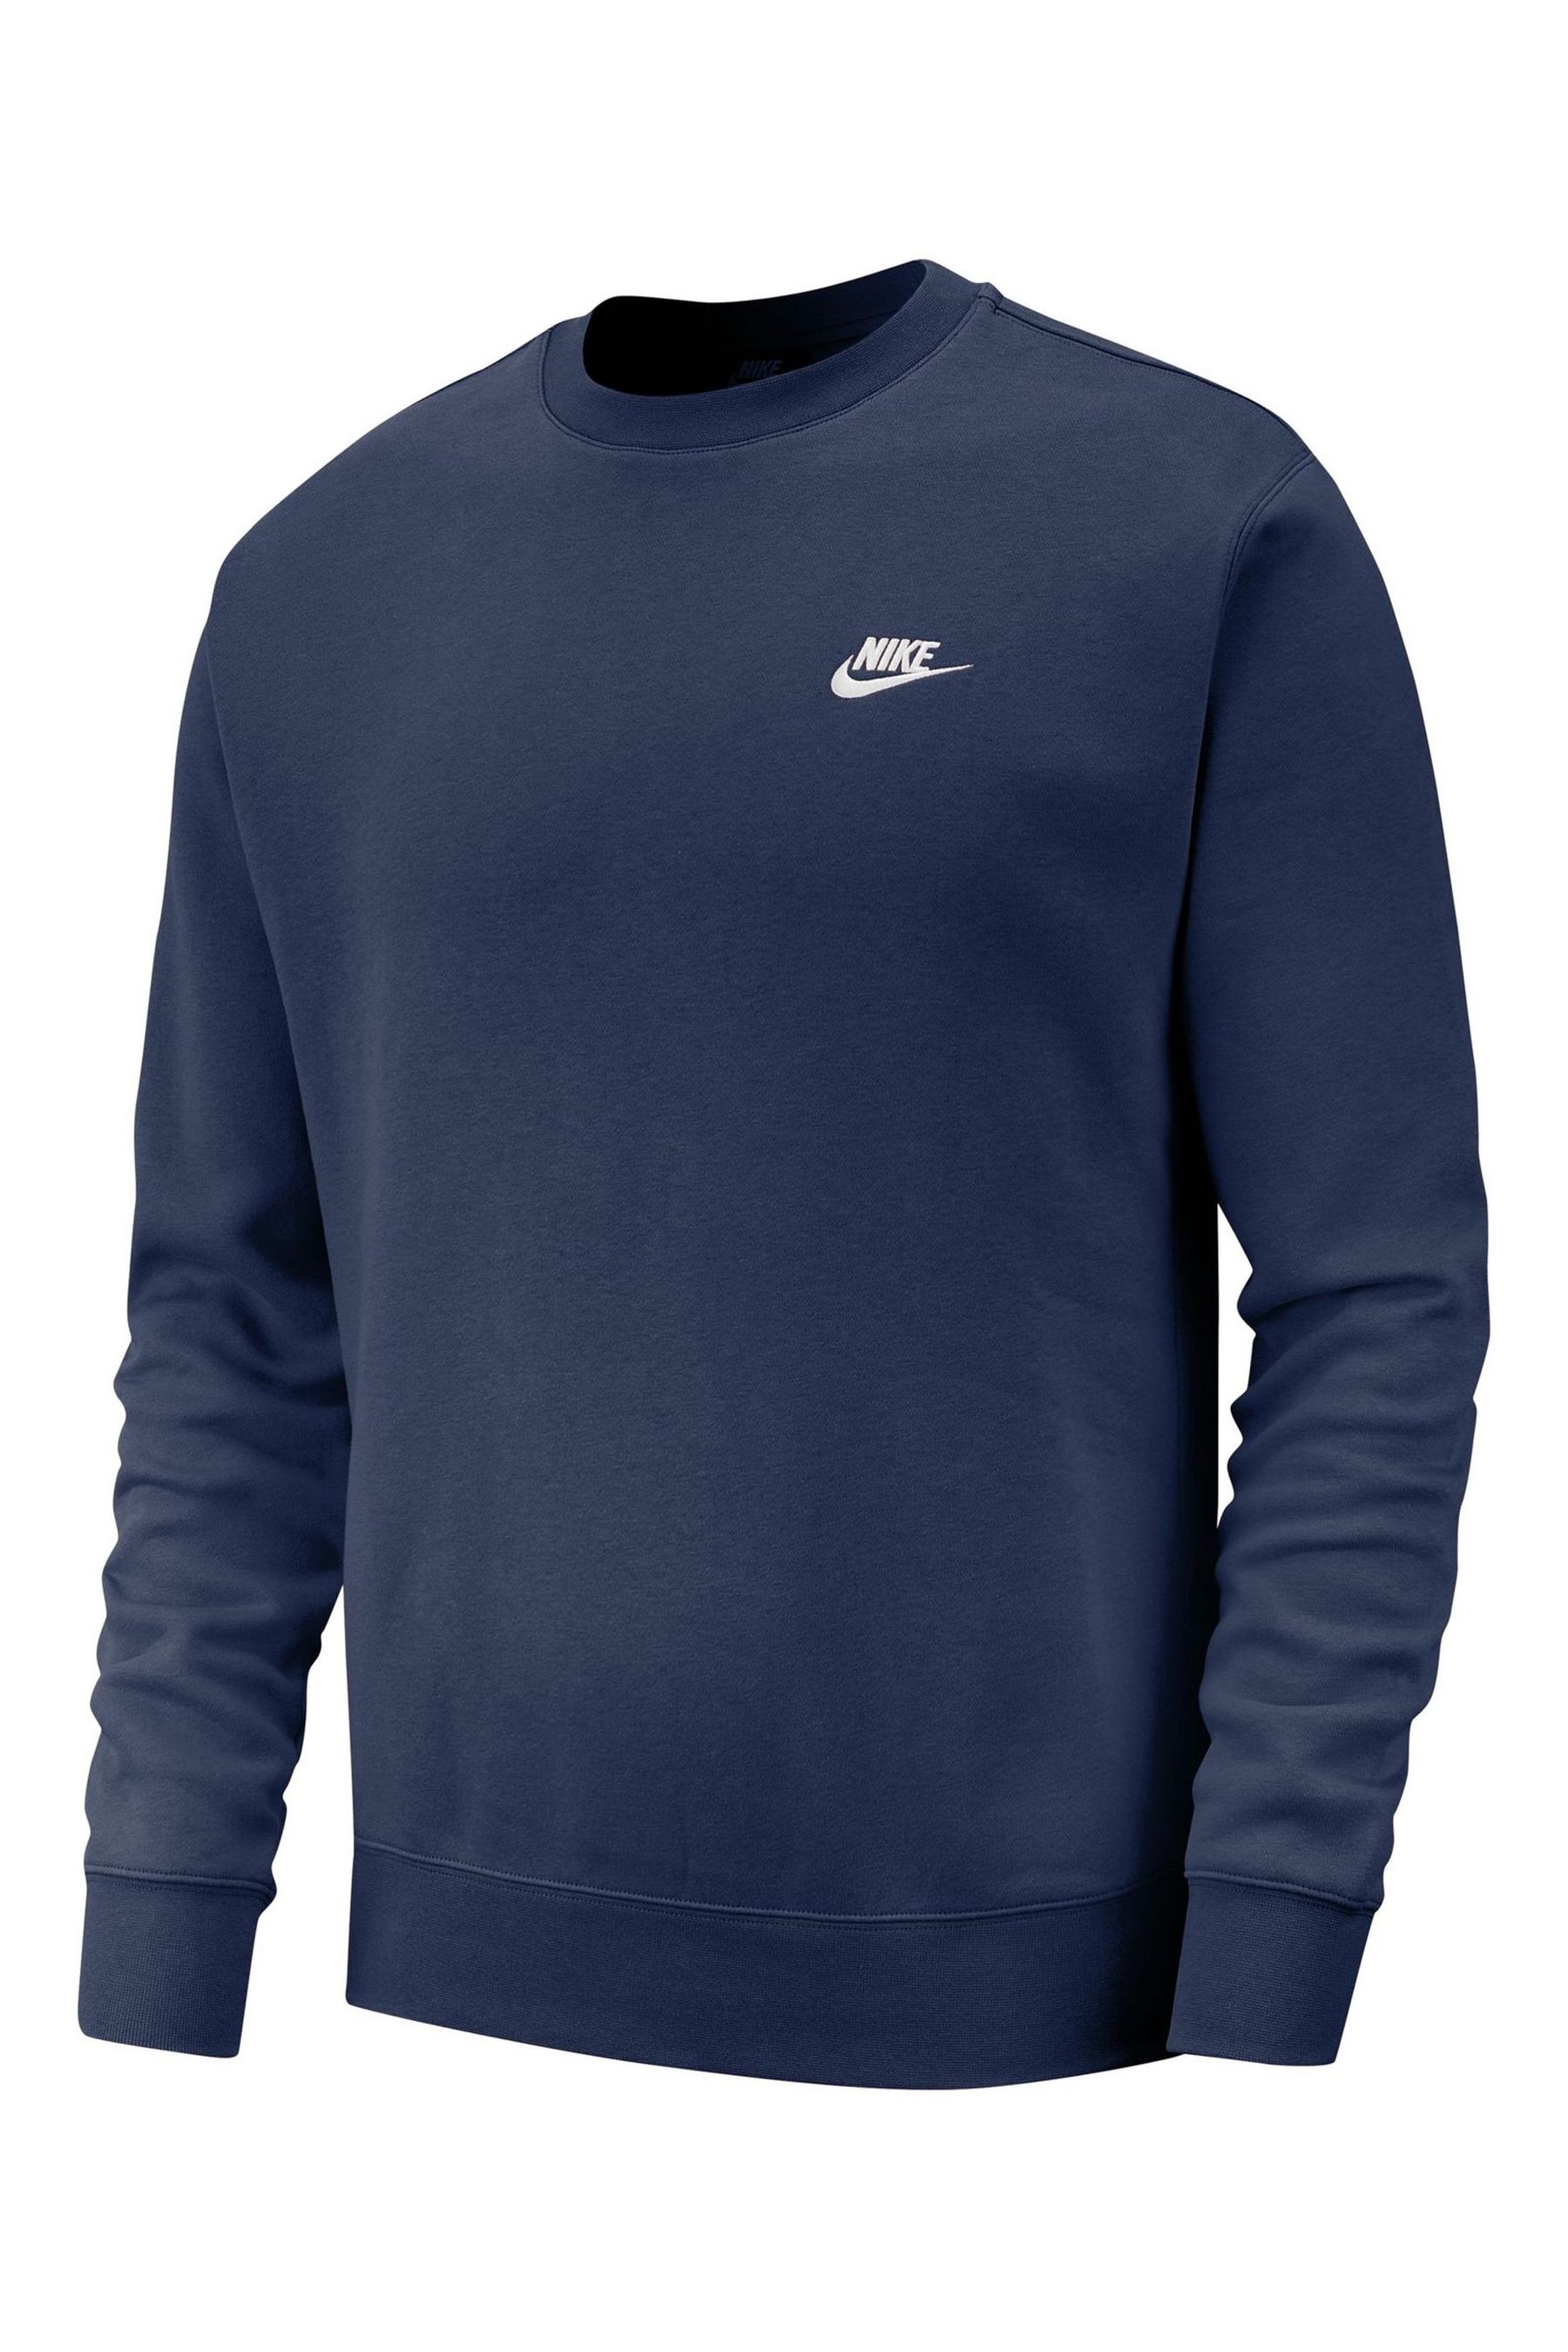 Buy Nike Navy Club Crew Sweatshirt from the Next UK online shop